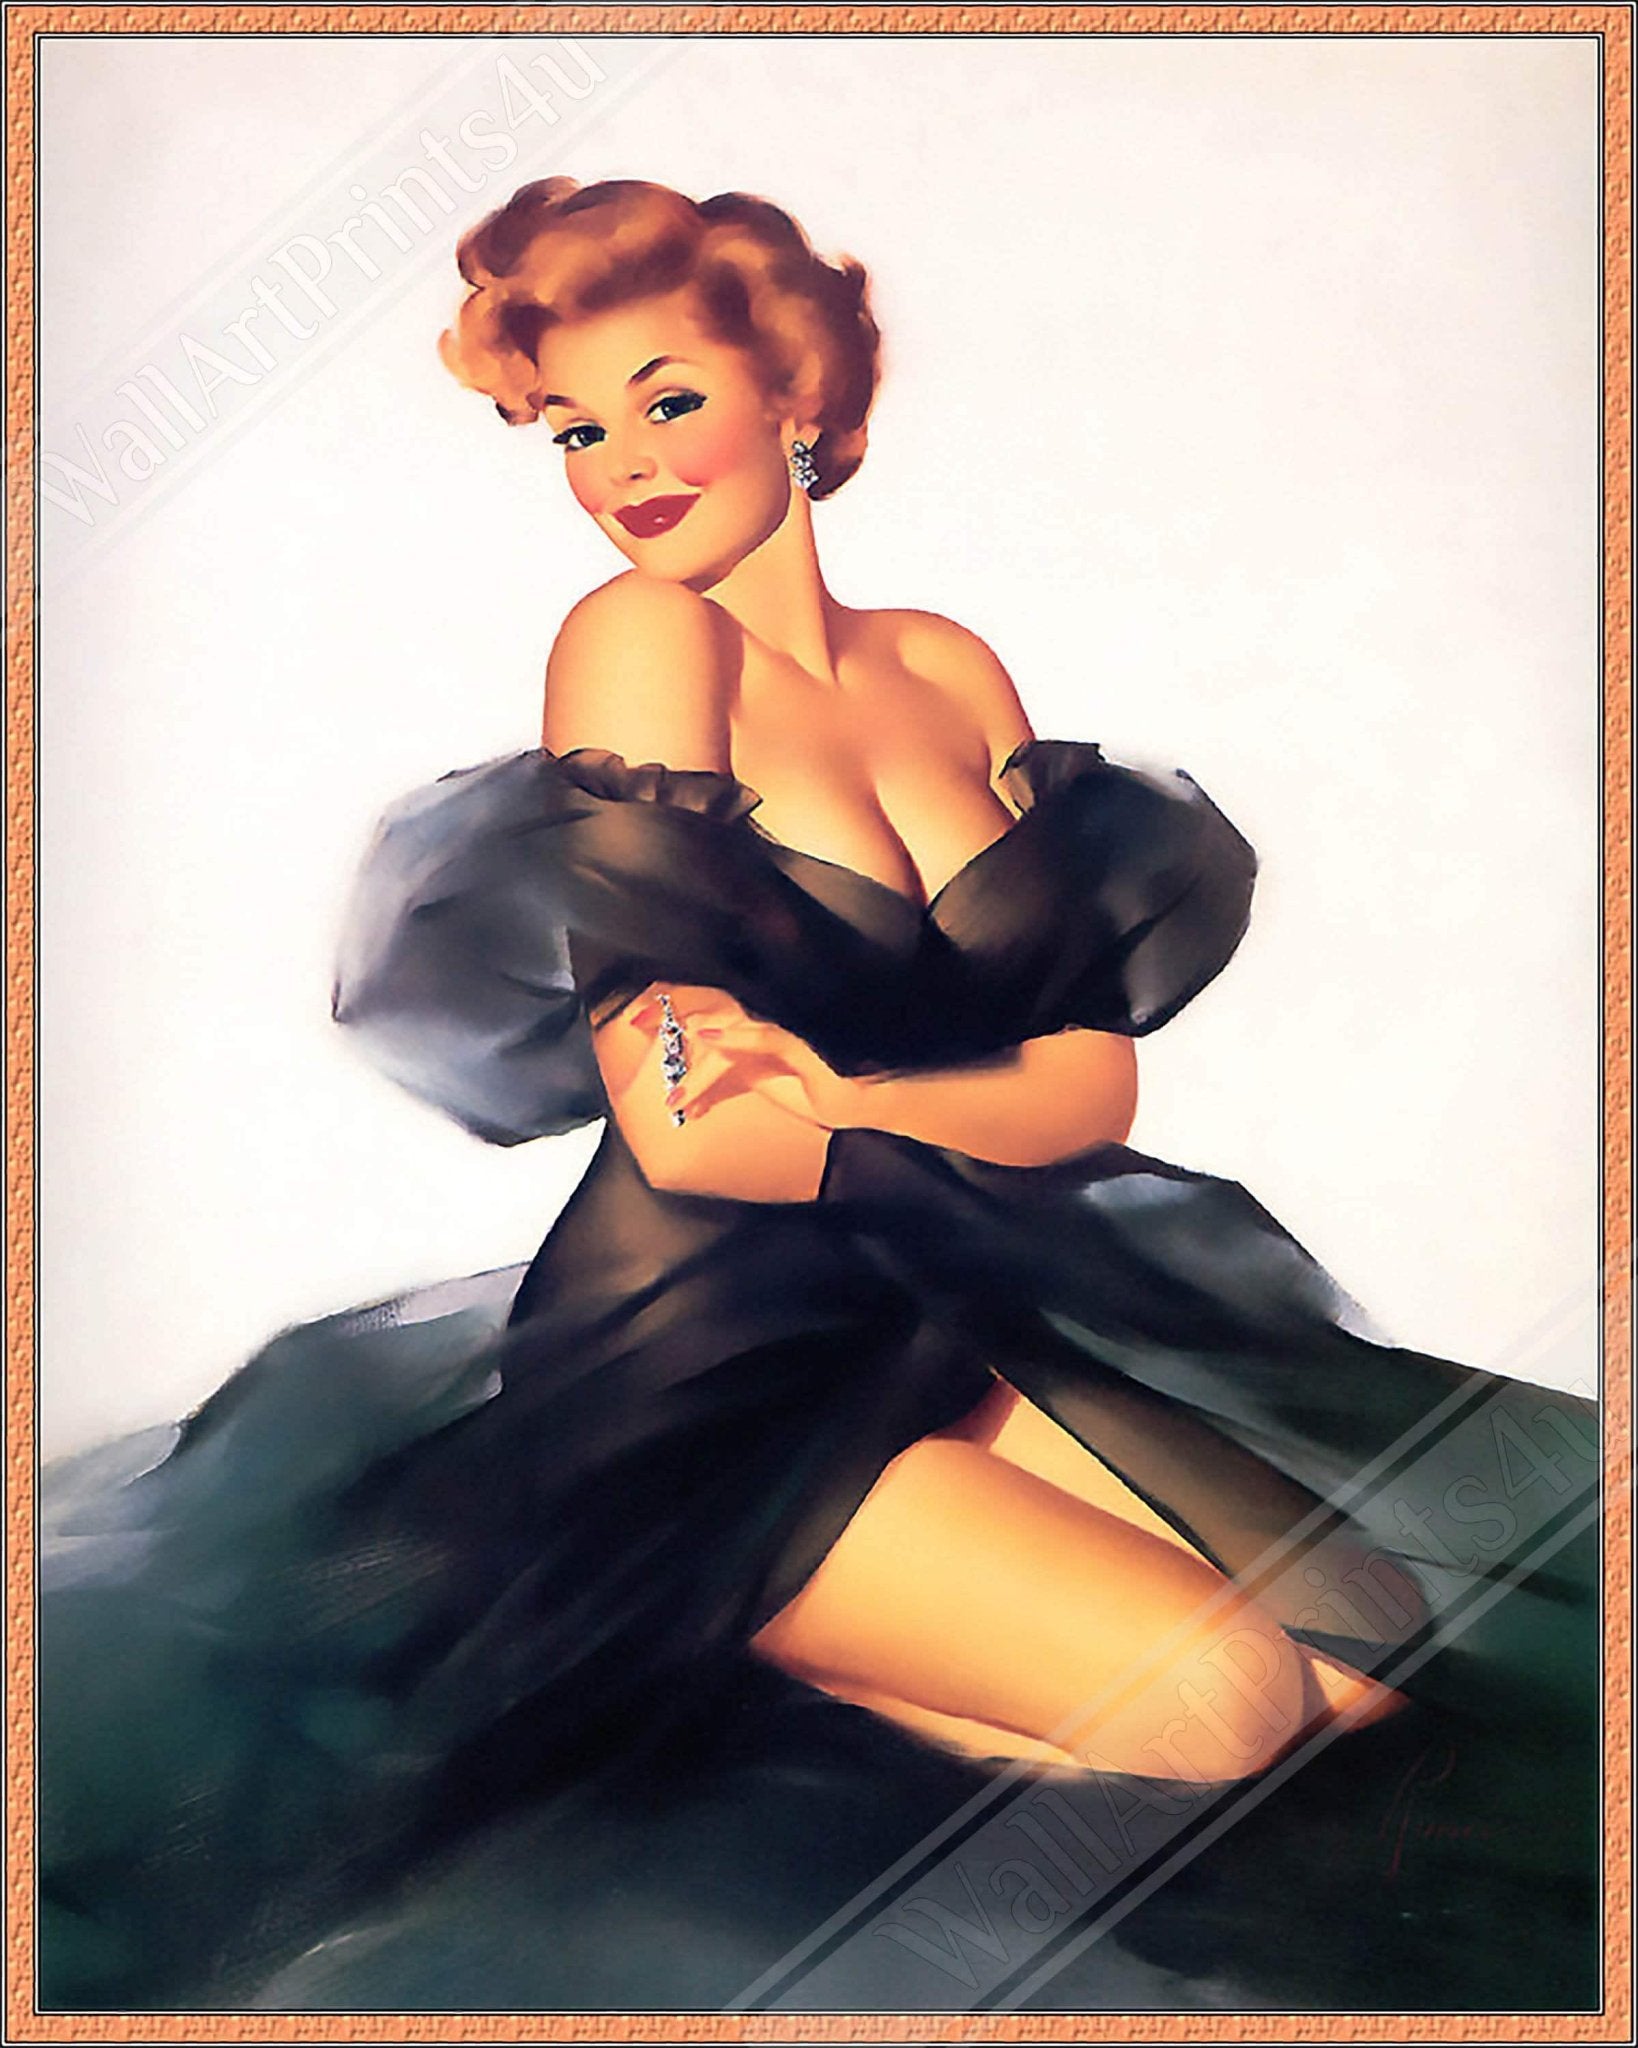 Pin Up Girl Framed, Little Black Dress, Edward Runci - Vintage Art - Retro Pin Up Girl Framed Print - Late 1940's - 1950's - WallArtPrints4U